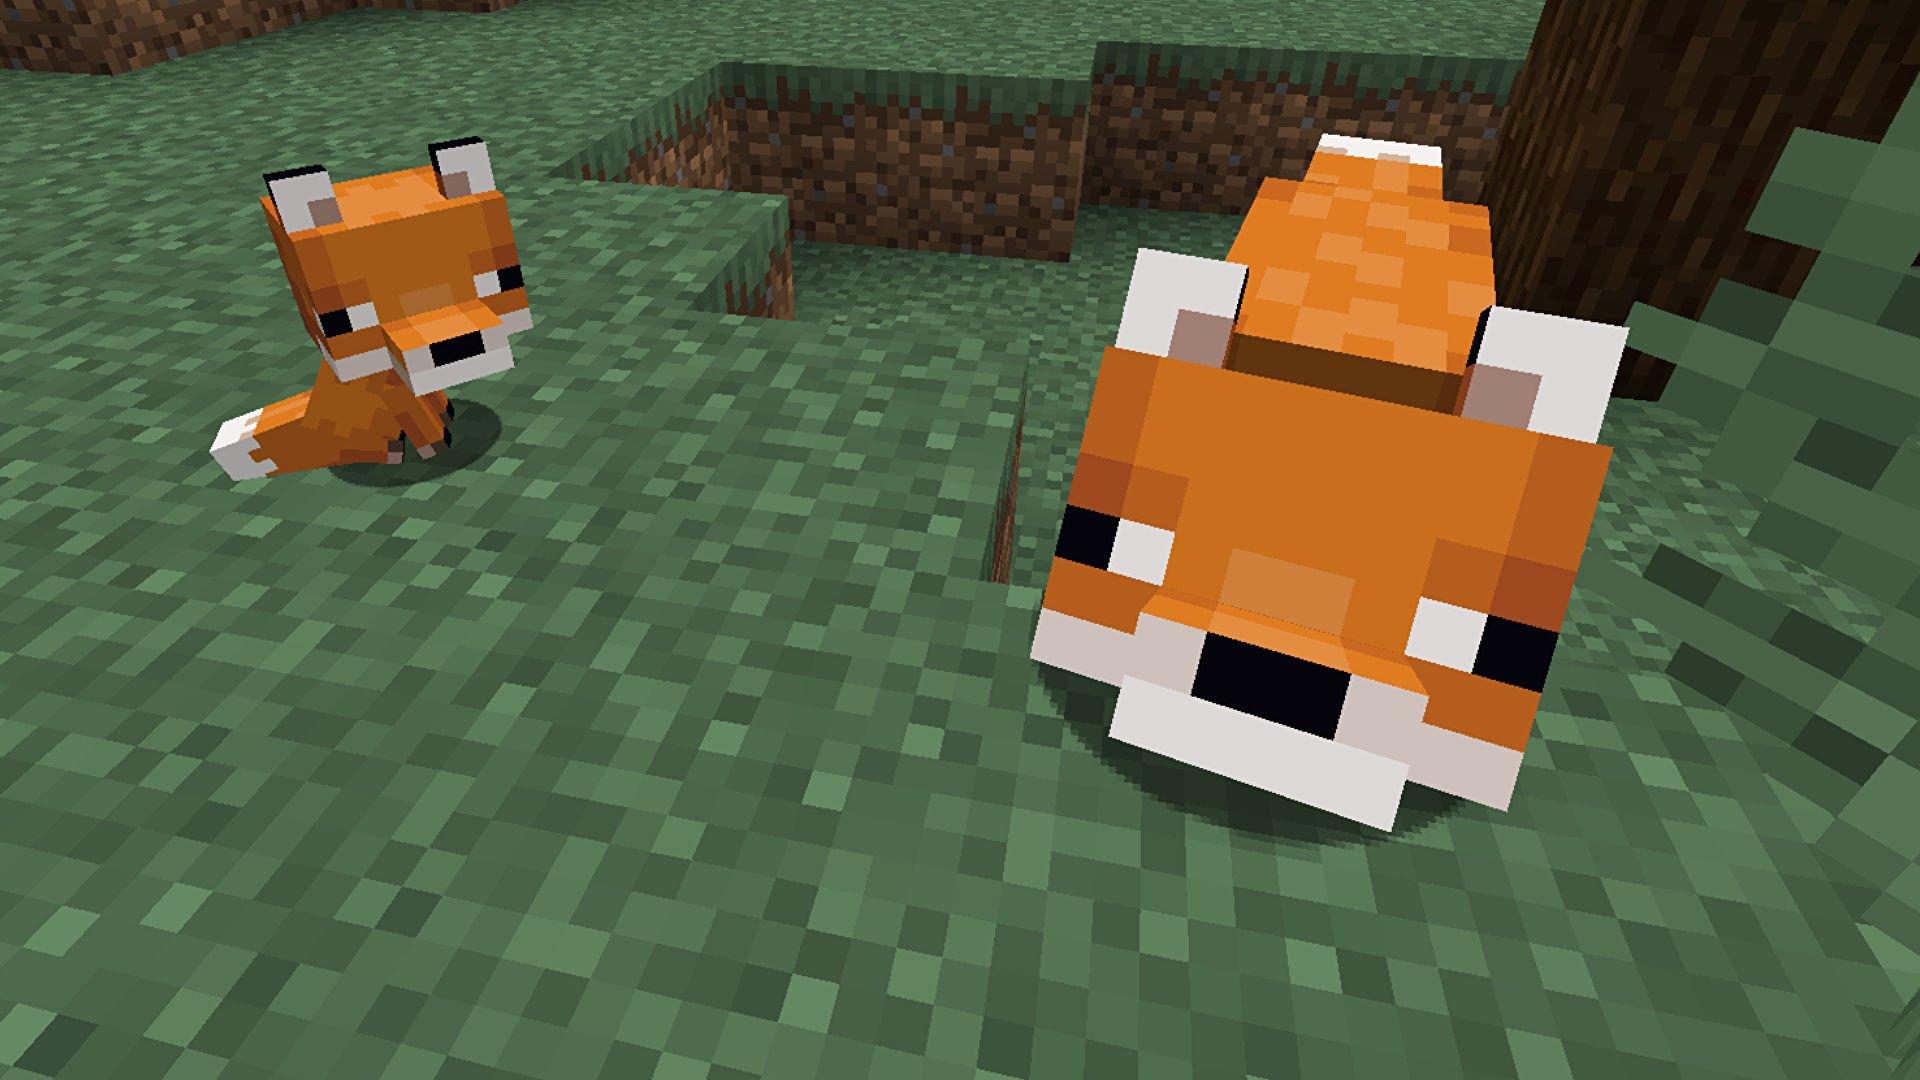 Foxes in 'Minecraft'